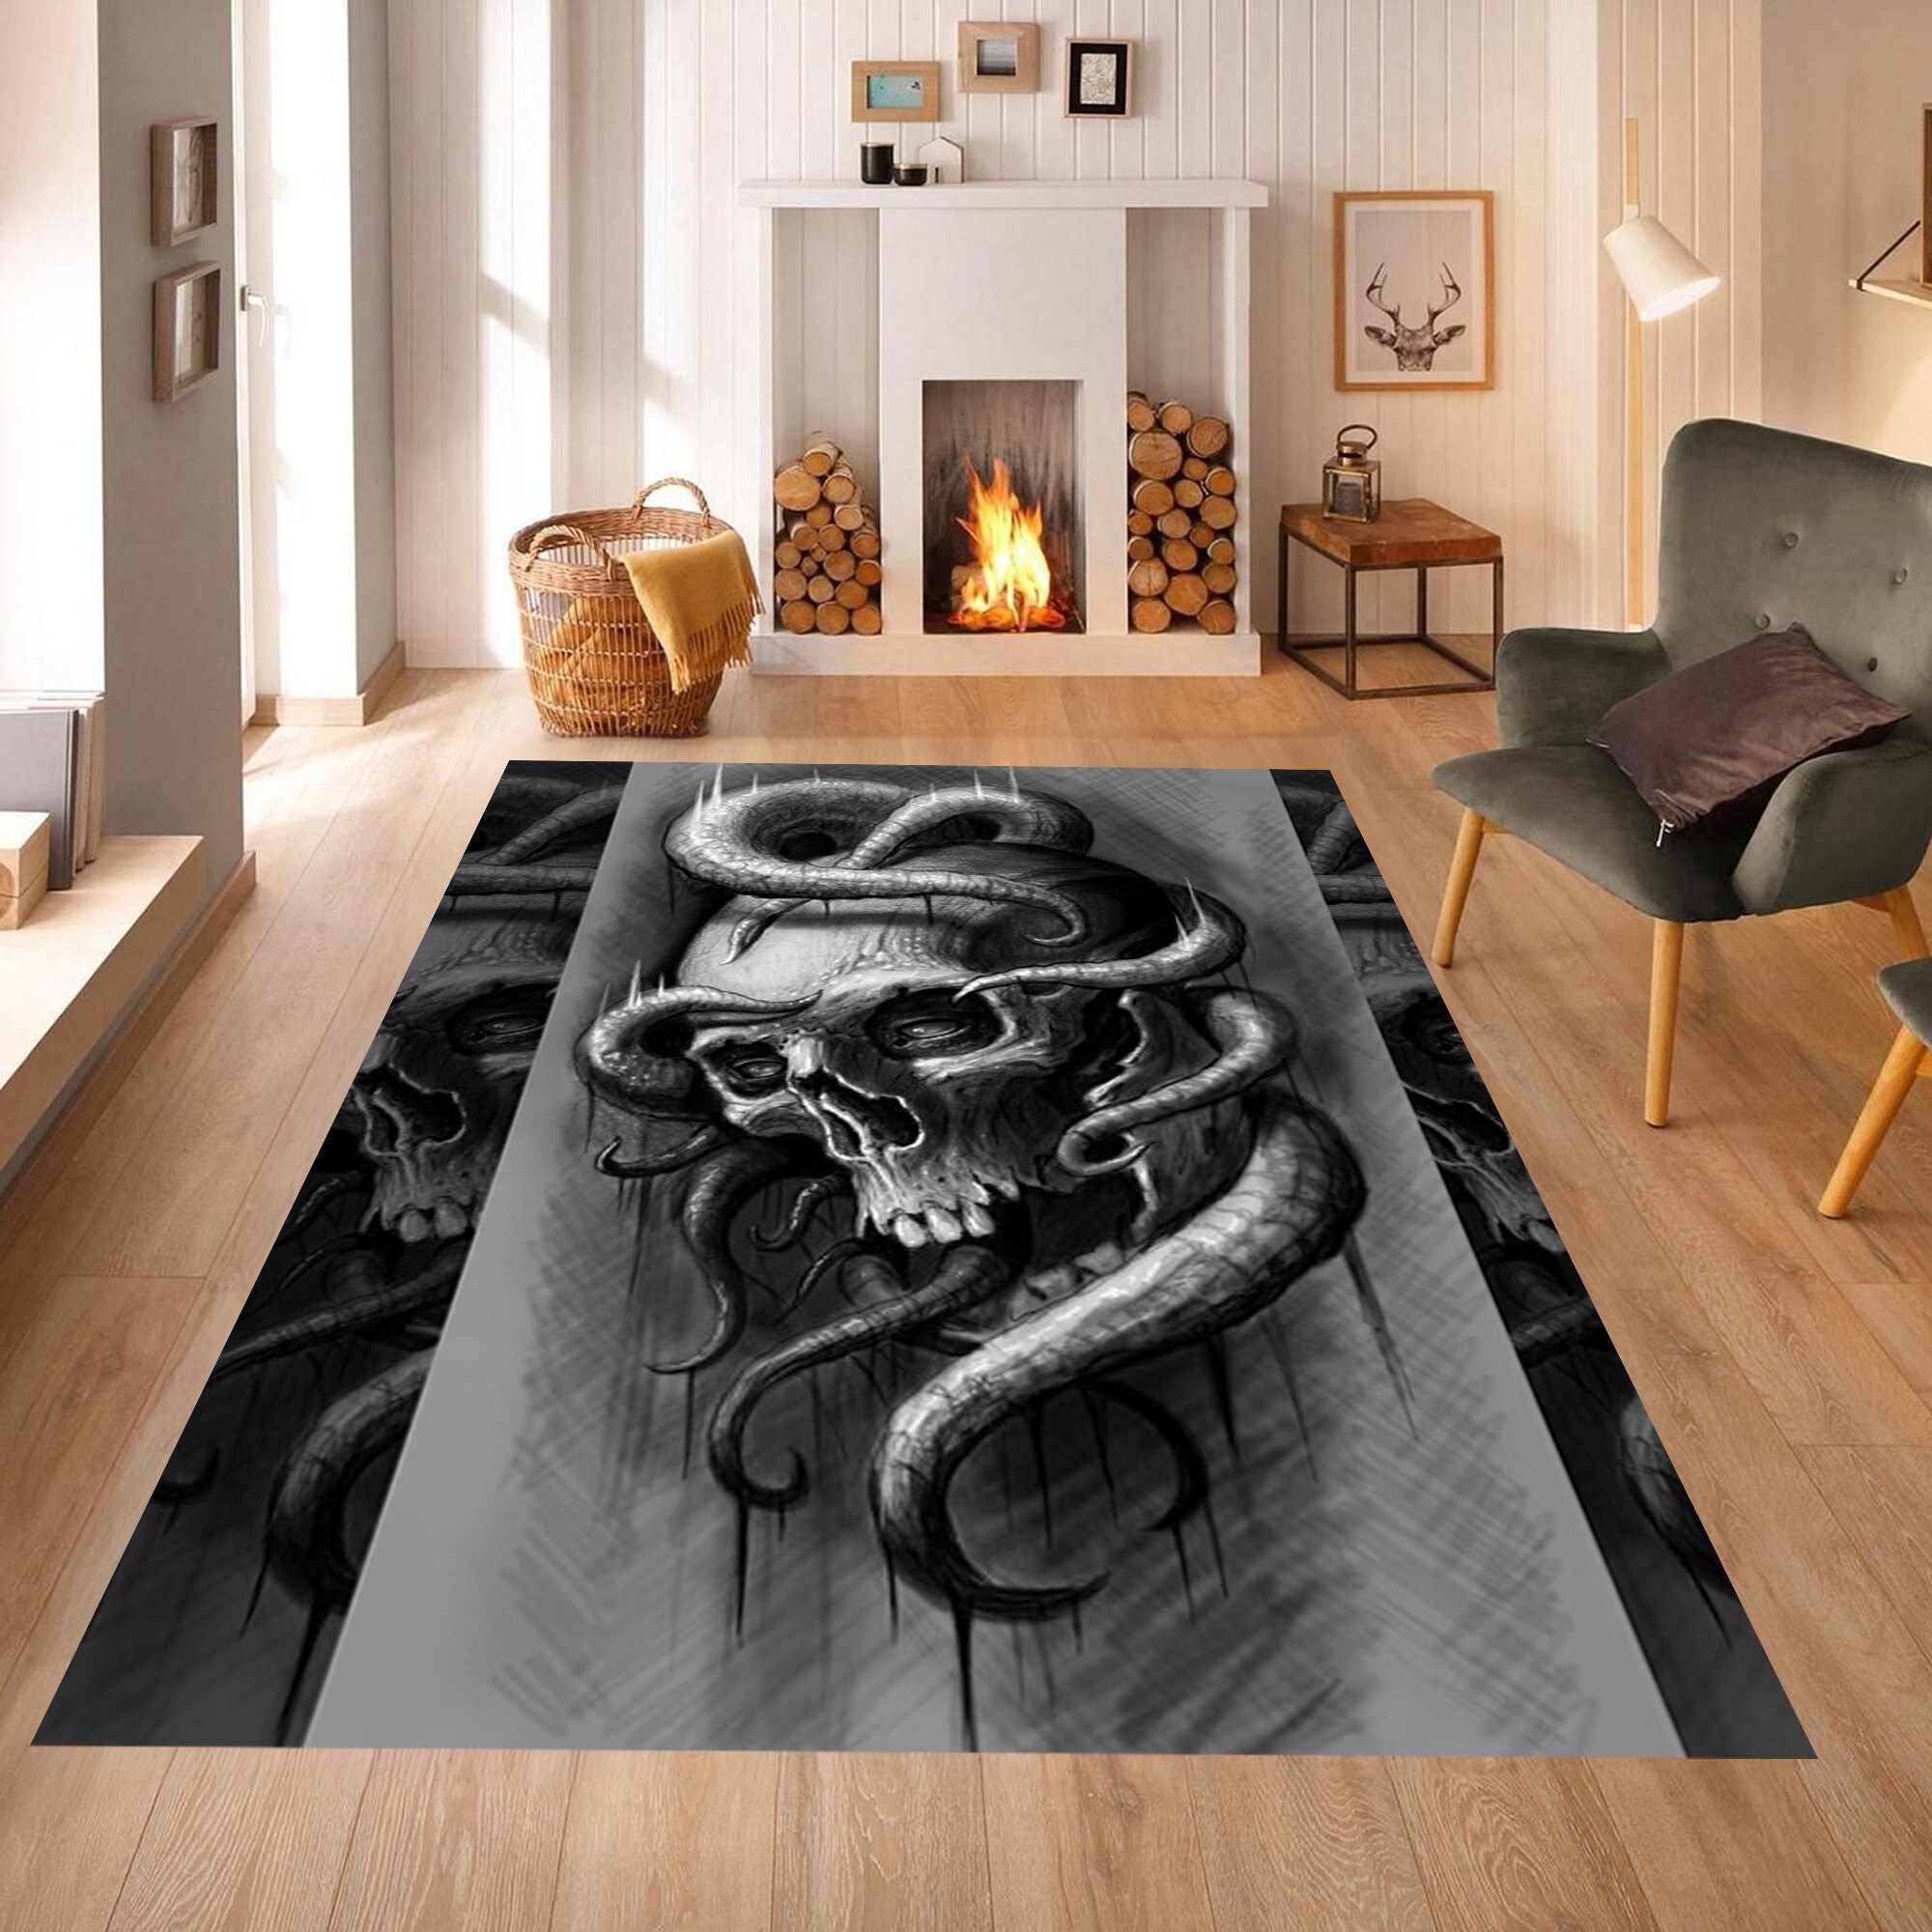 Discover Gothic Skull Rug,Avengers Rug,Skeleton Rug,Snake Rug,Ghost Themped Rug,Bone Carpet,Horror Home Decor,Decorated Skull,Fantastic Teens Room